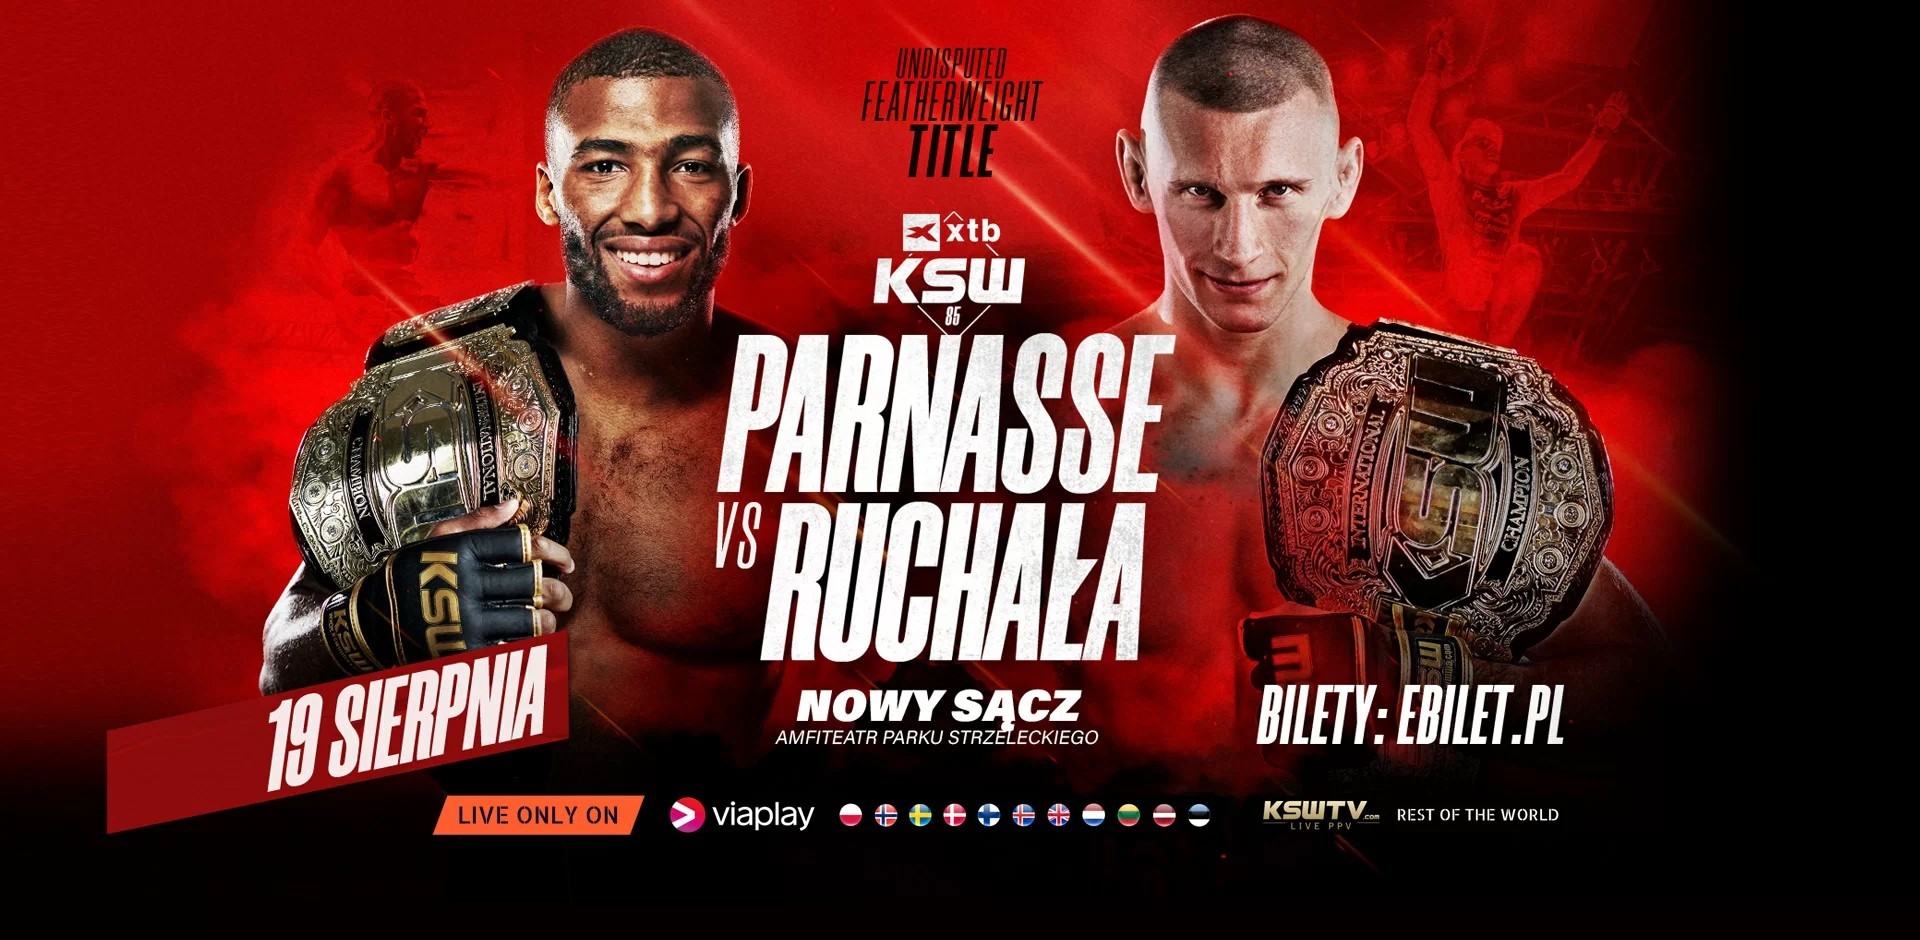 KSW 85: Parnasse vs. Ruchala Fight Card, Start Times, Live Streams